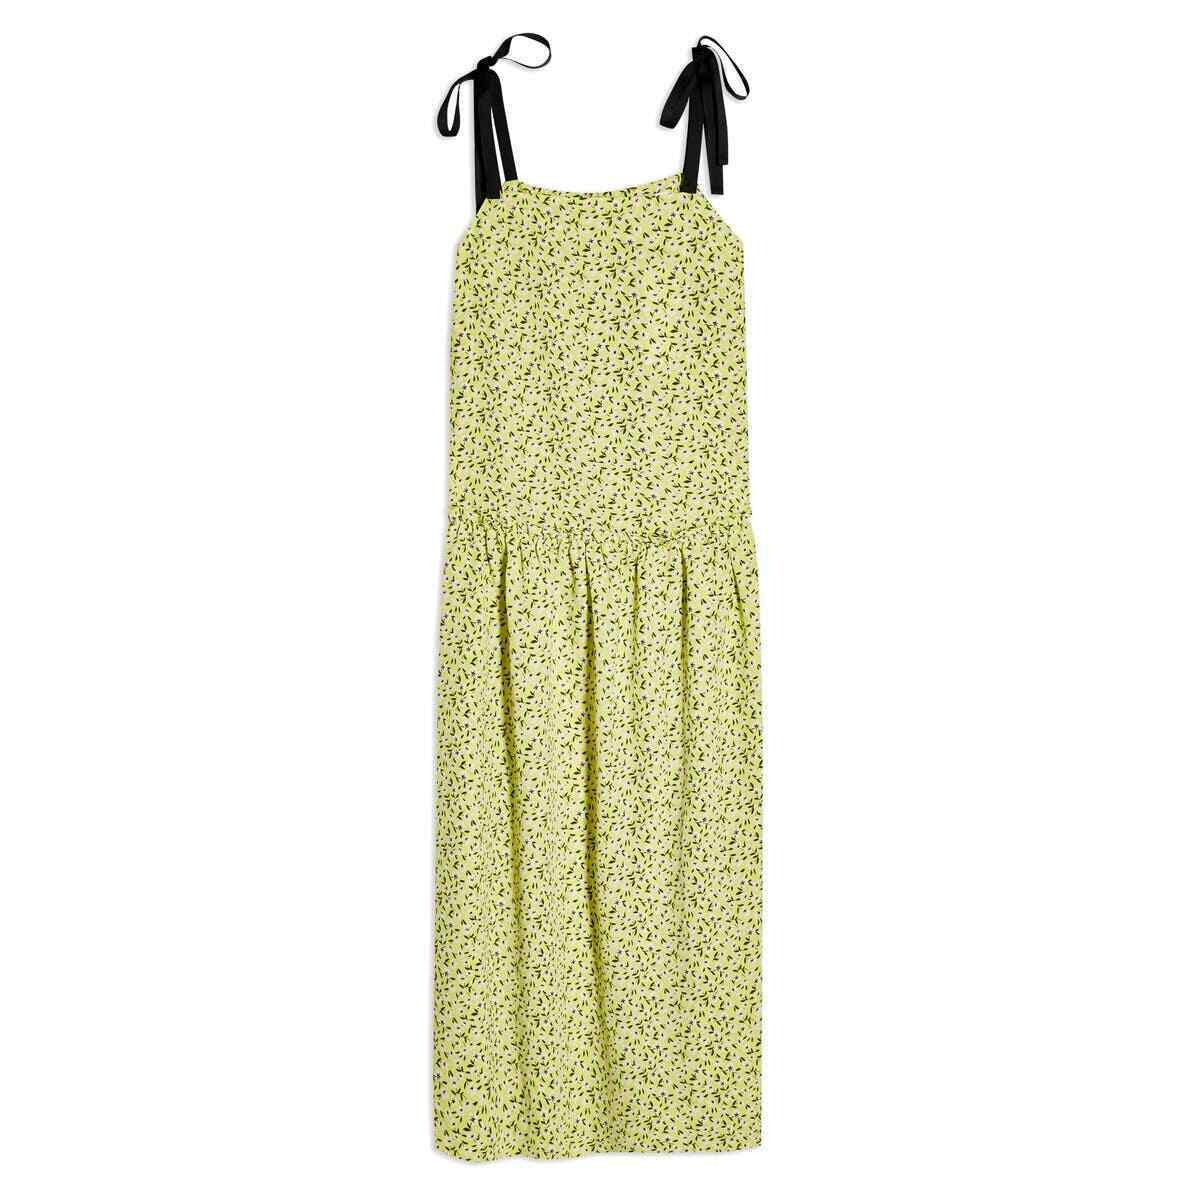 NWT Women's Topshop Floral Print Drop Waist MIDI Dress, Size 8 US - Lime Green